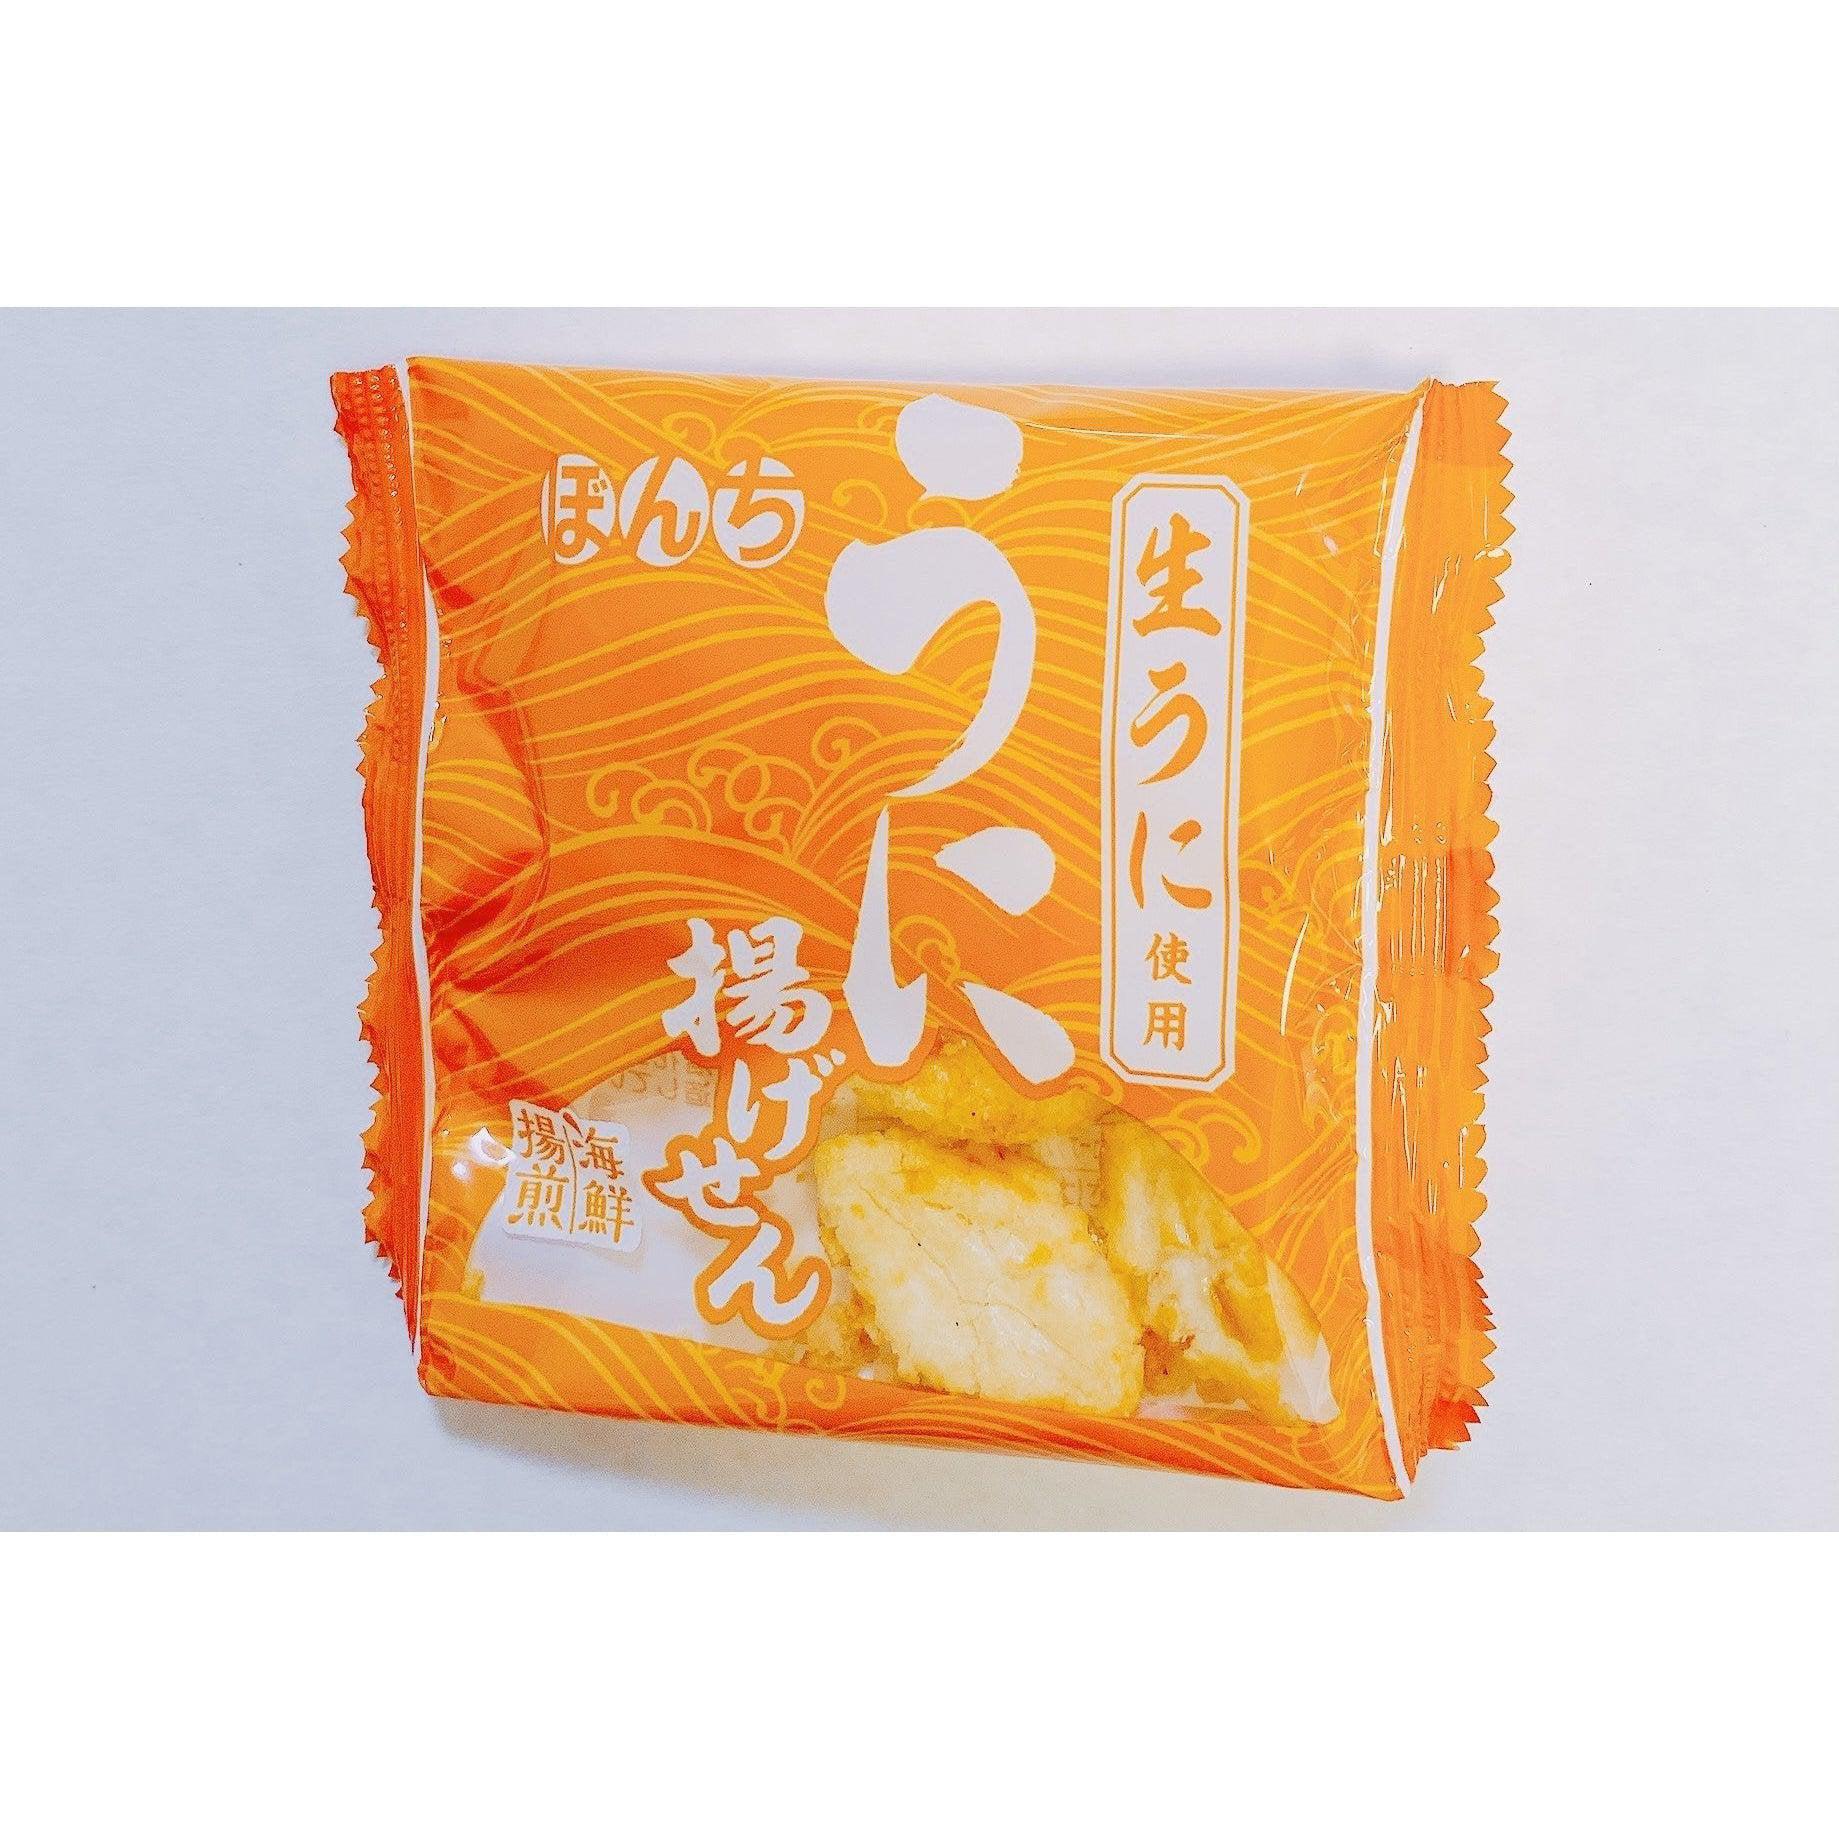 Bonchi Age Senbei Fried Rice Crackers Uni Sea Urchin Flavor 64g (Pack of 6) - YOYO JAPAN